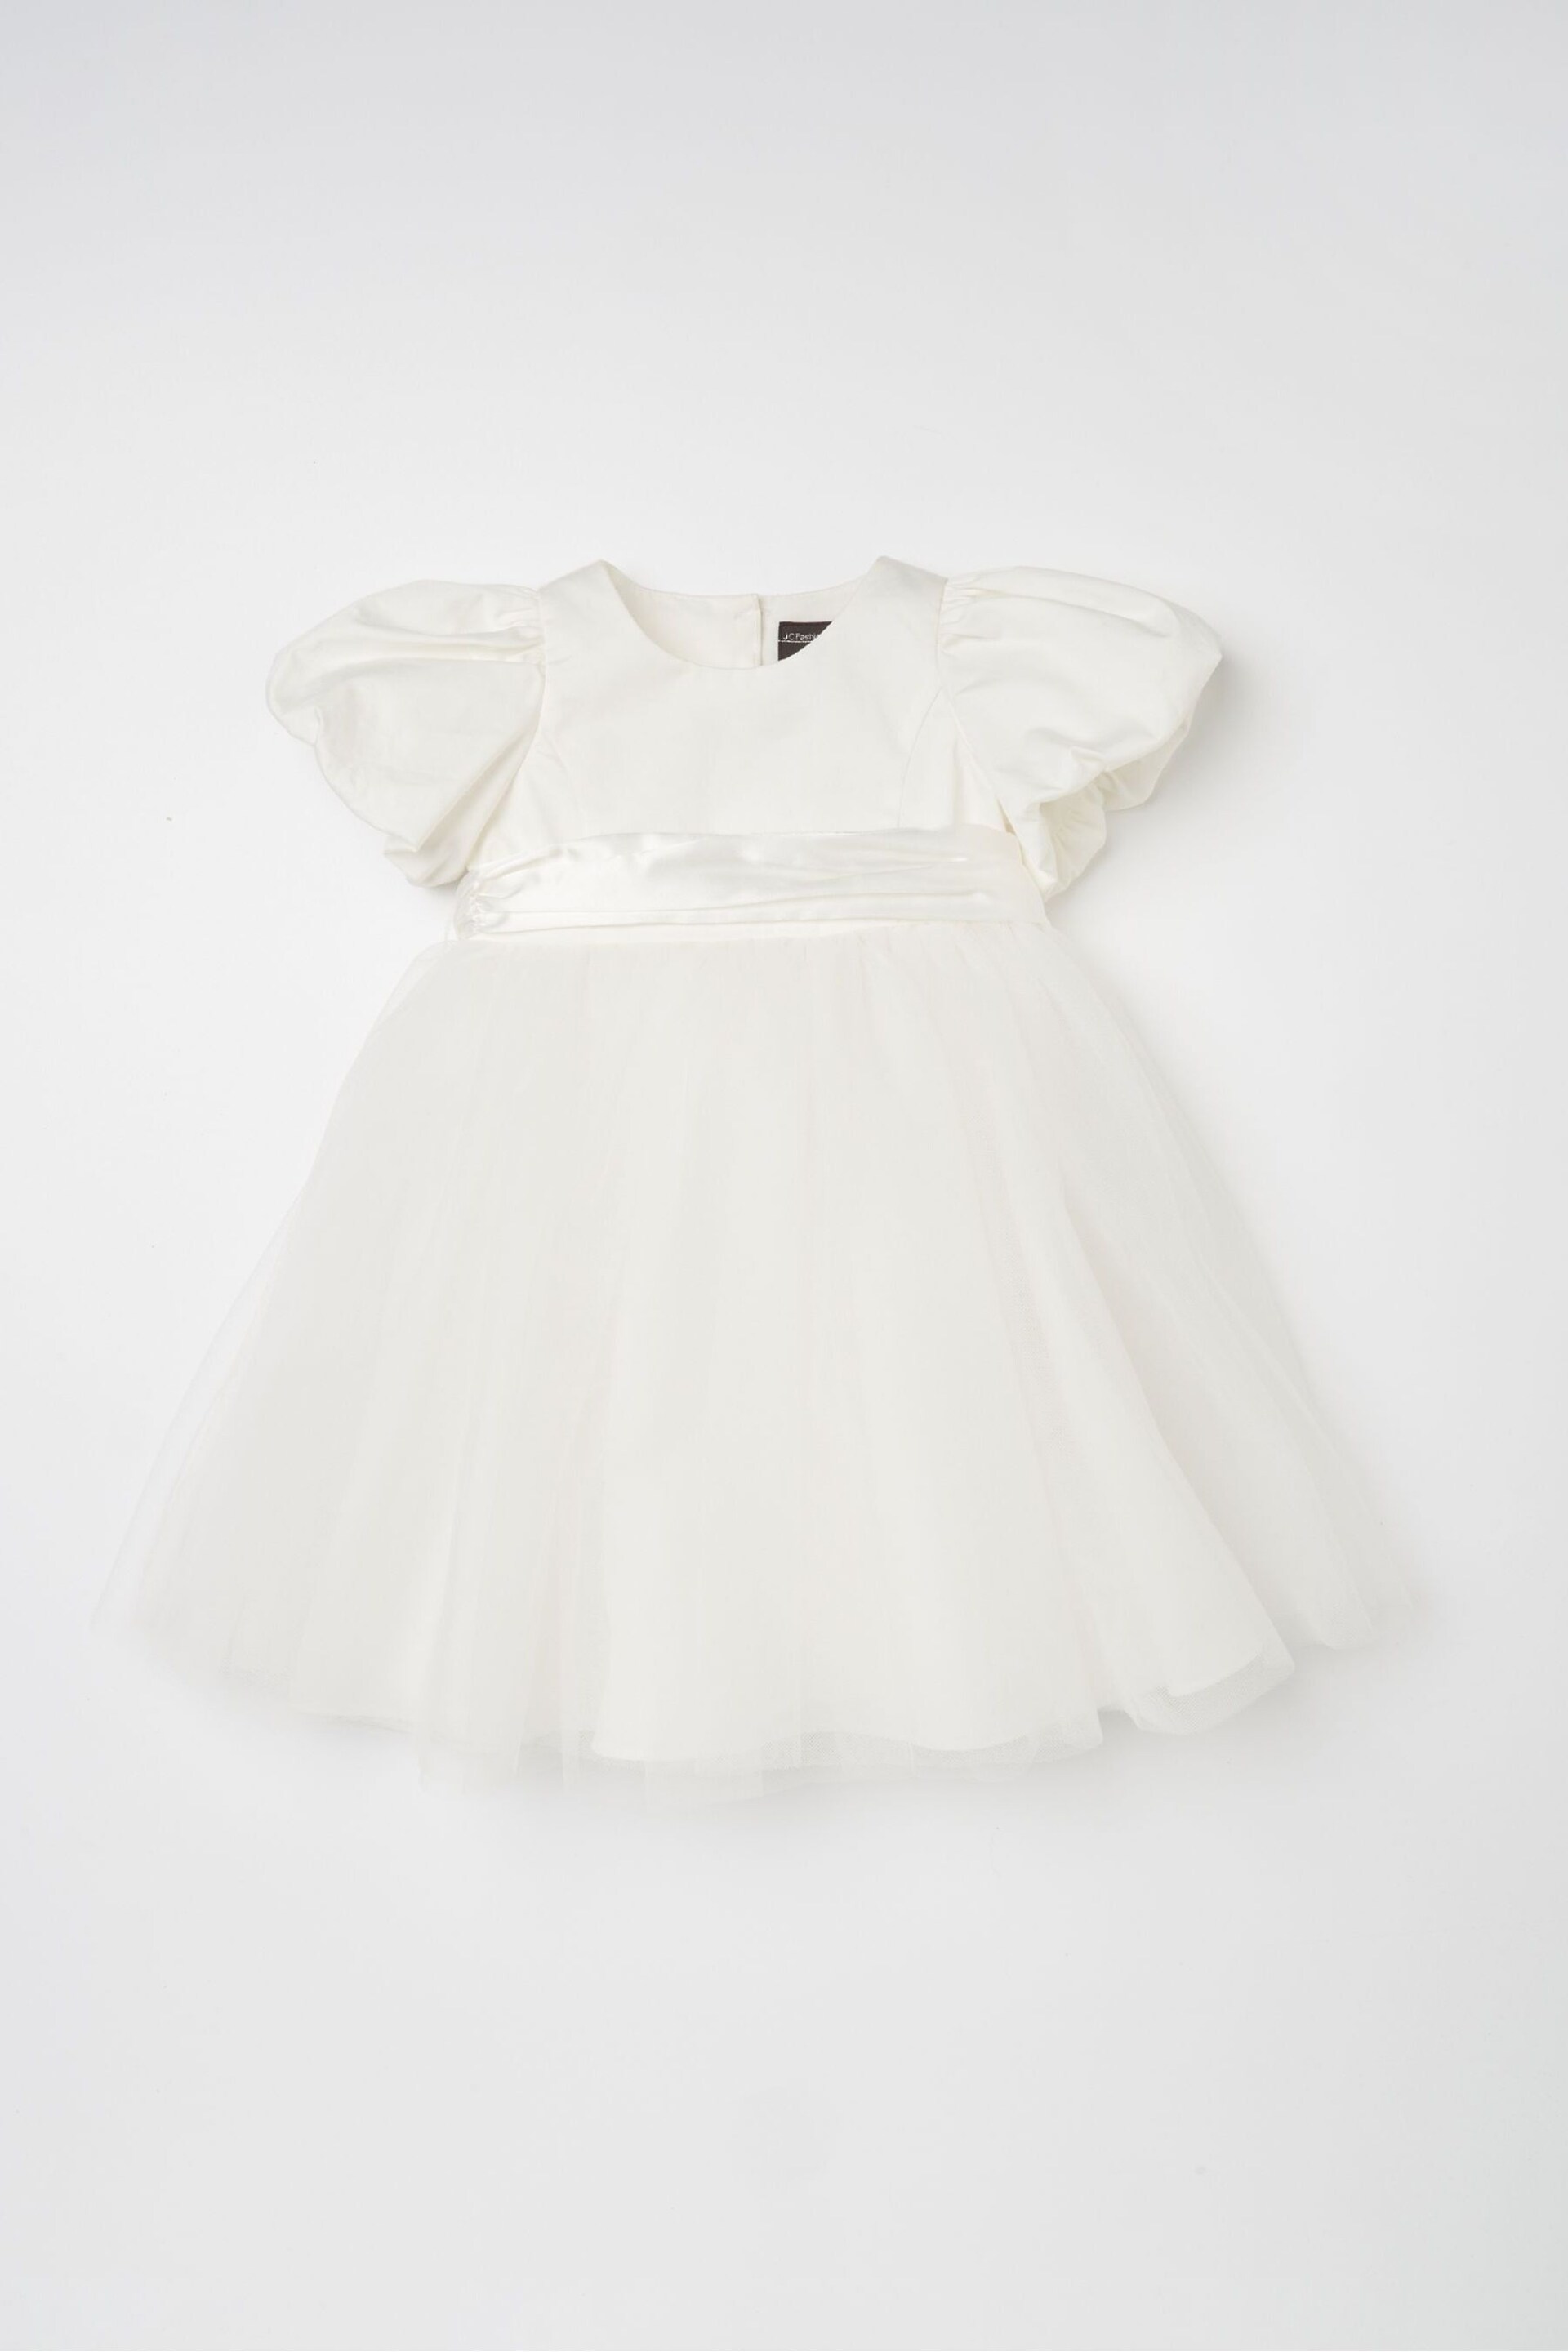 Angel & Rocket White Taffeta Bow Baby Dress - Image 5 of 7